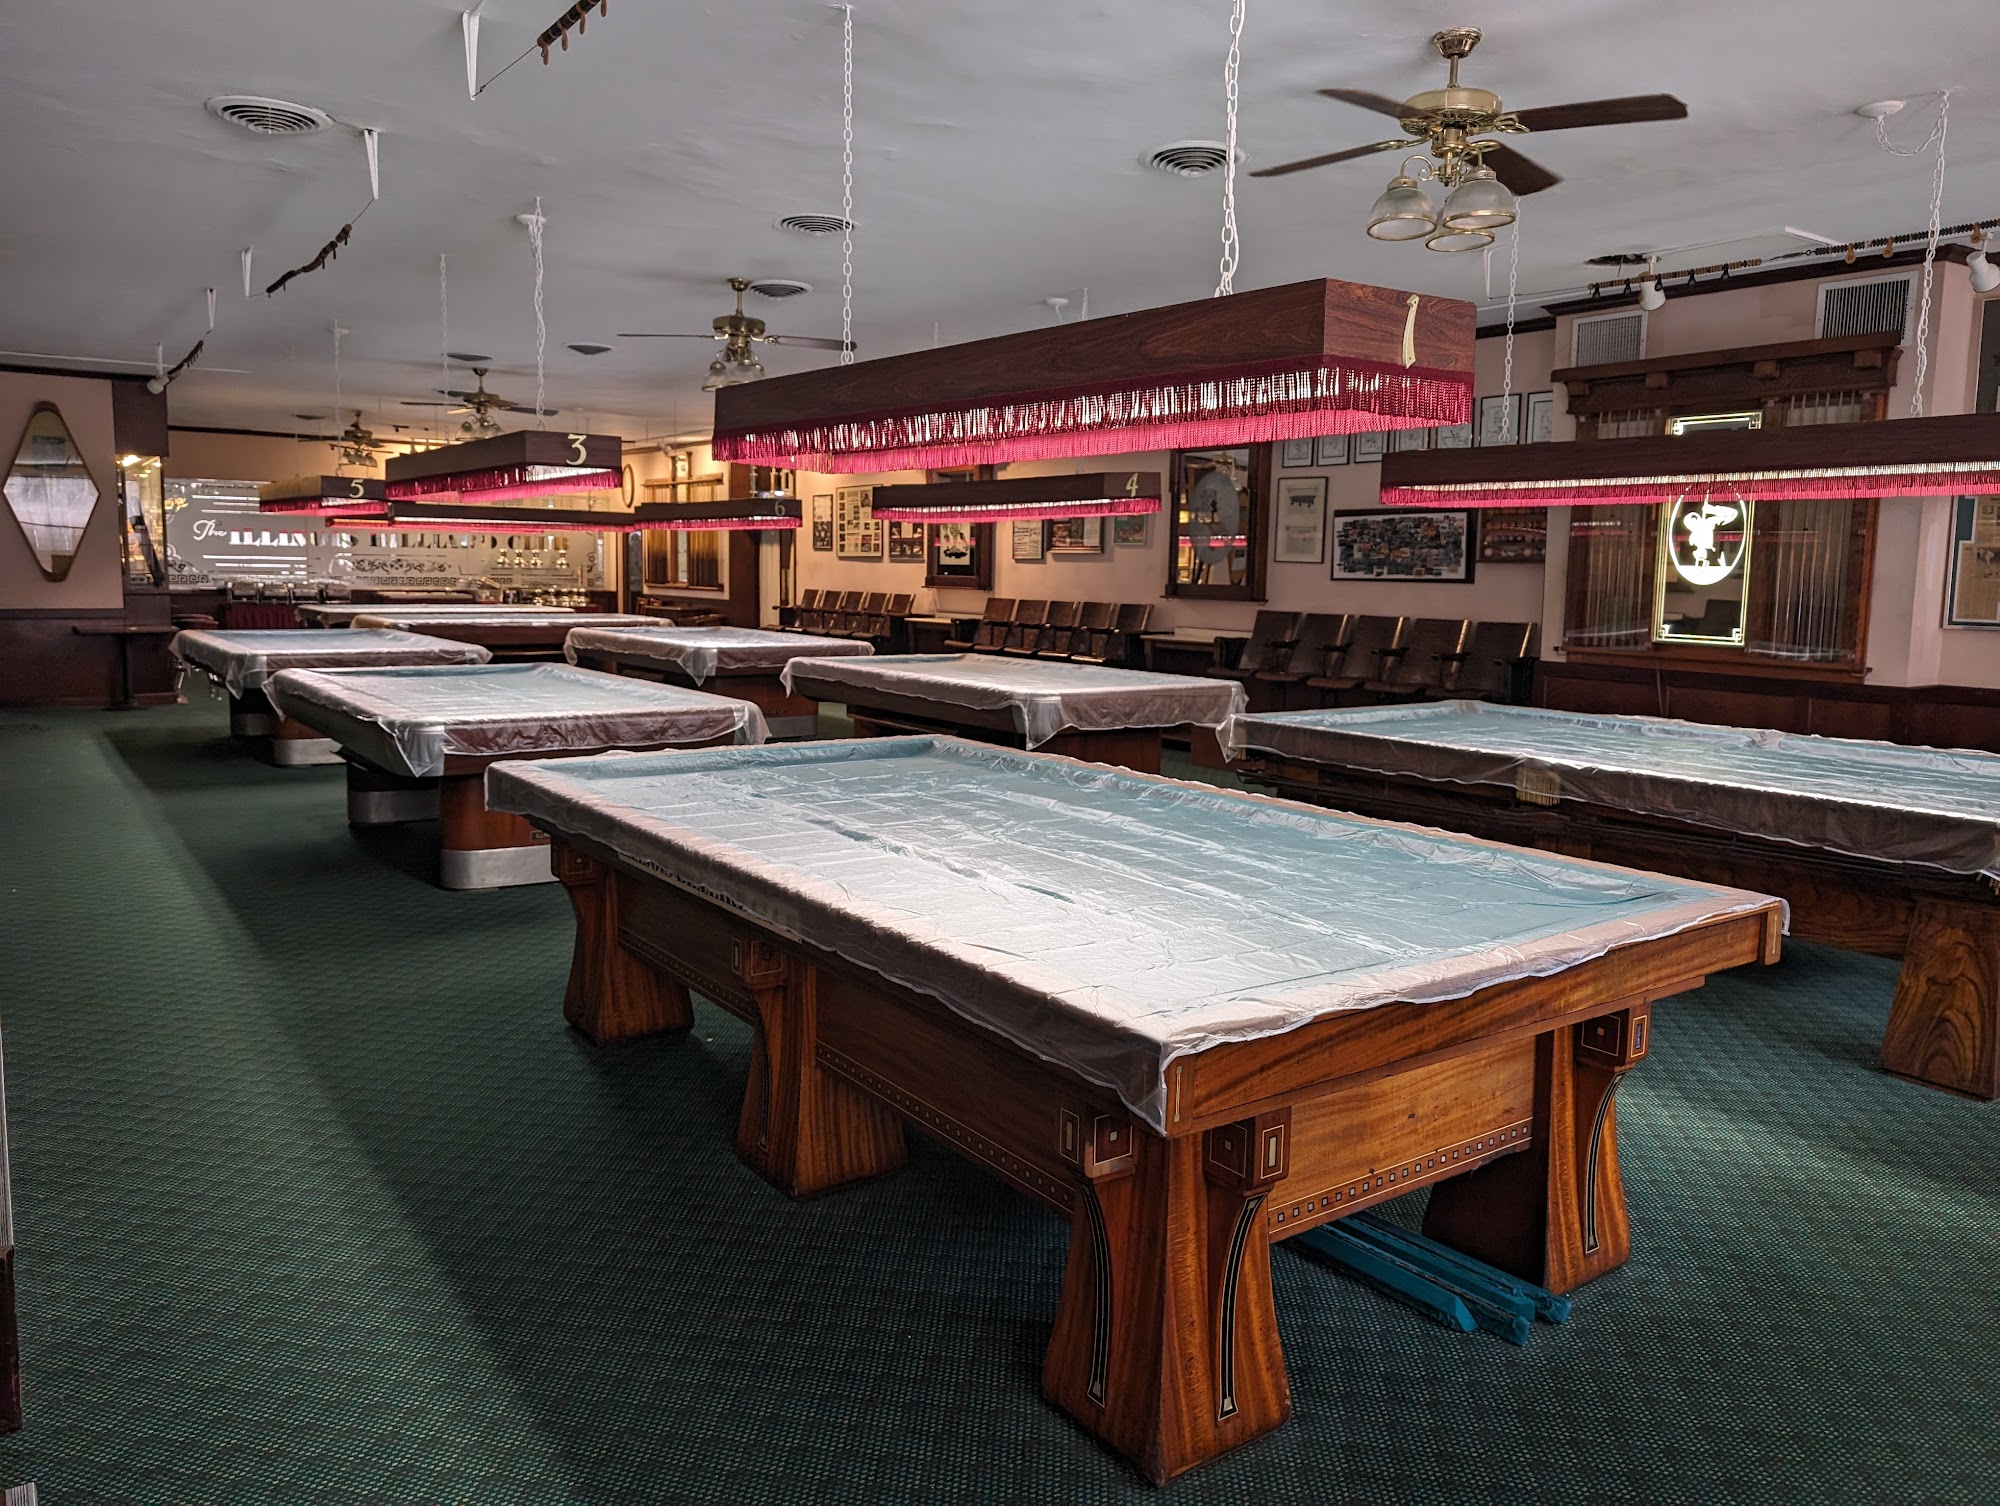 Bonnie's Dining & Banquets The Illinois Billiard Club